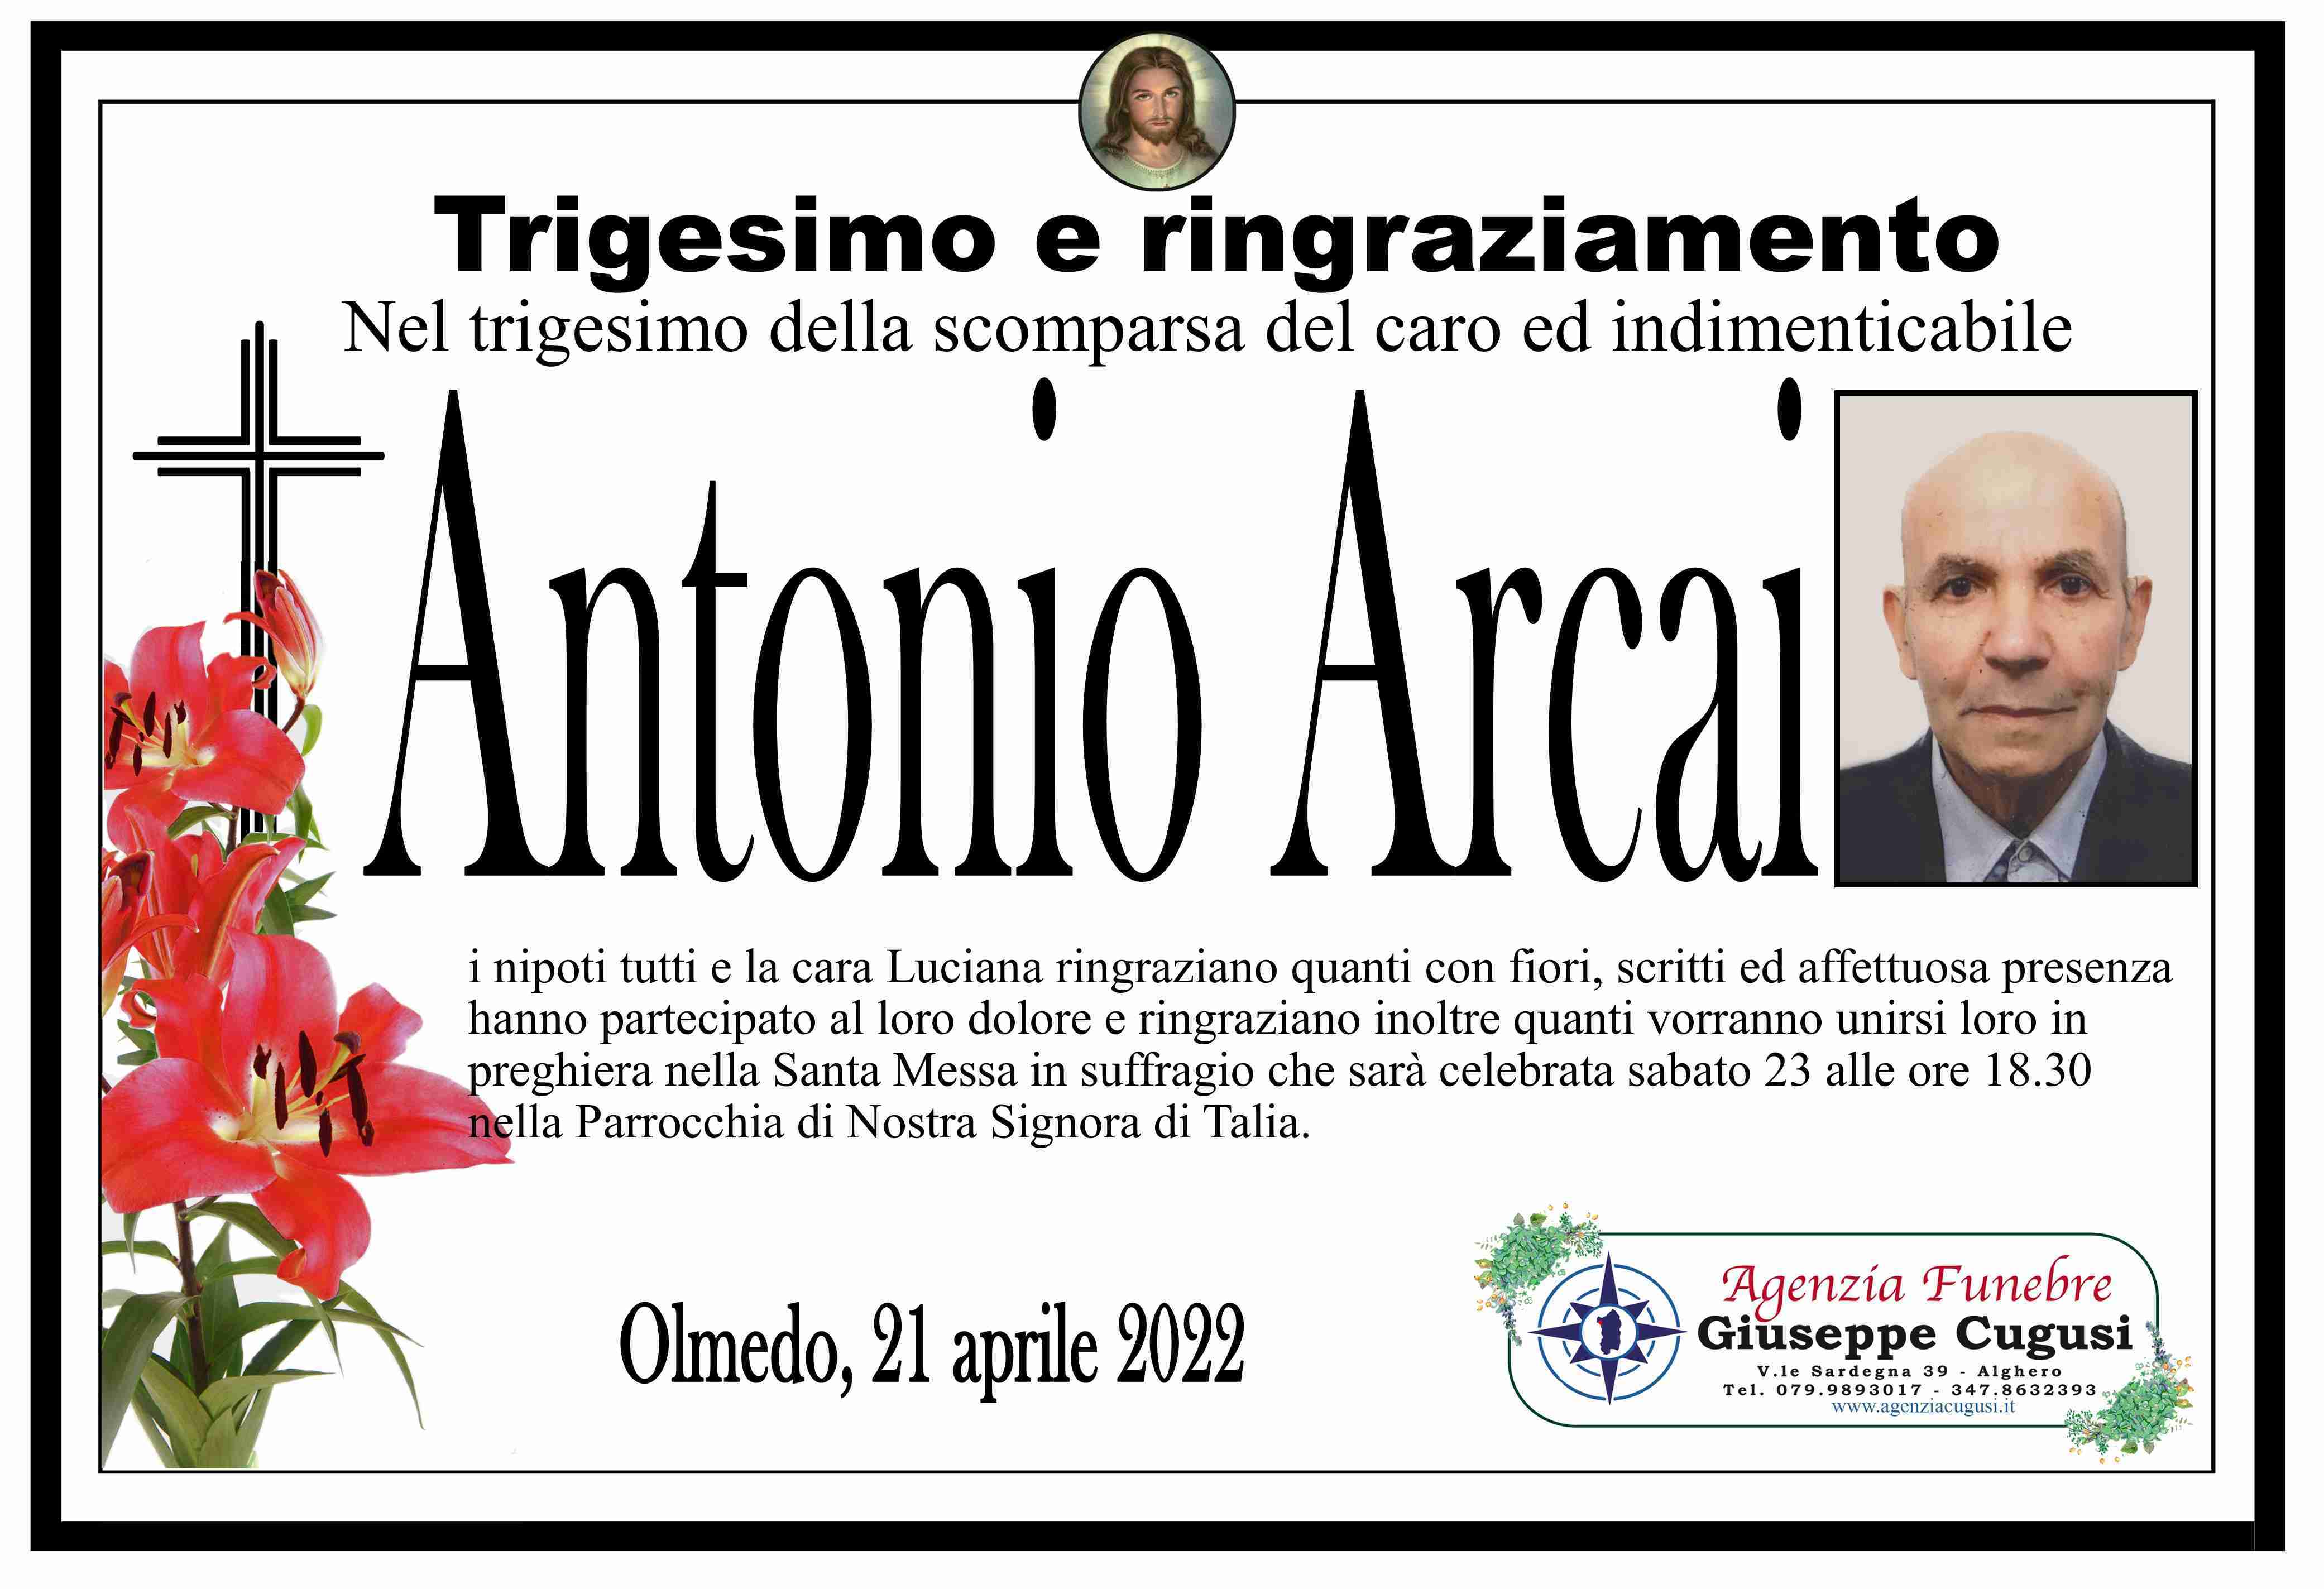 Antonio Arcai